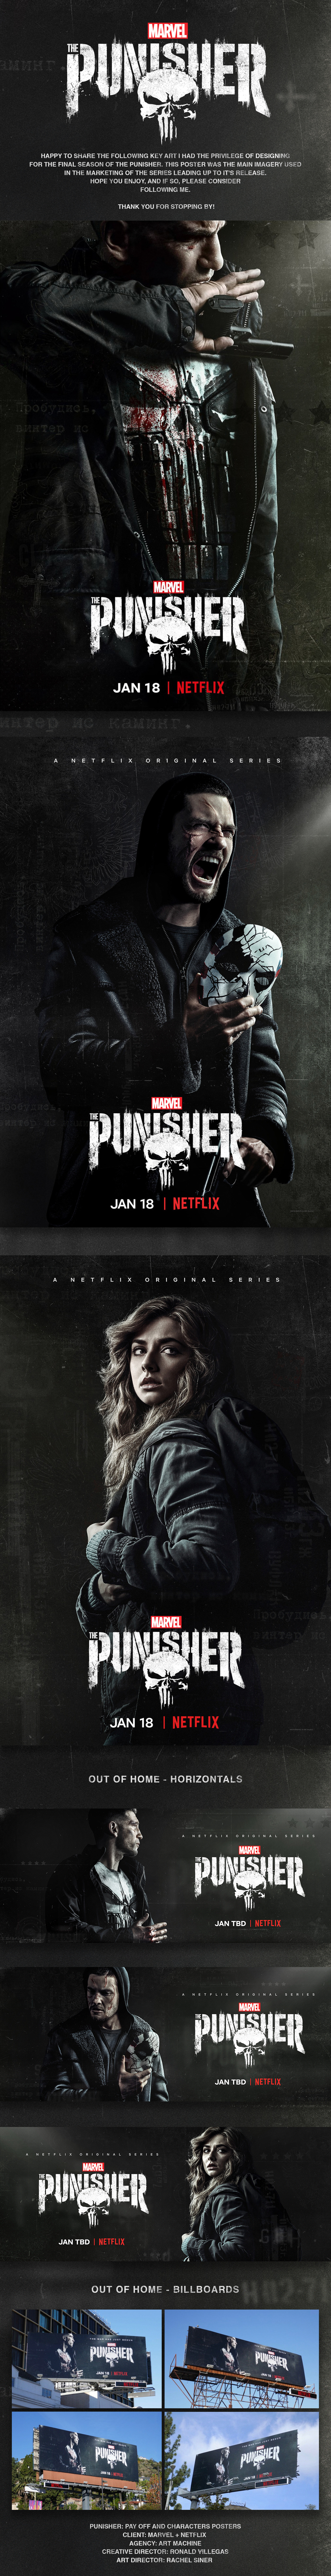 the punisher marvel key art mcu netfilx punisher poster movie poster posters Jon Bernthal